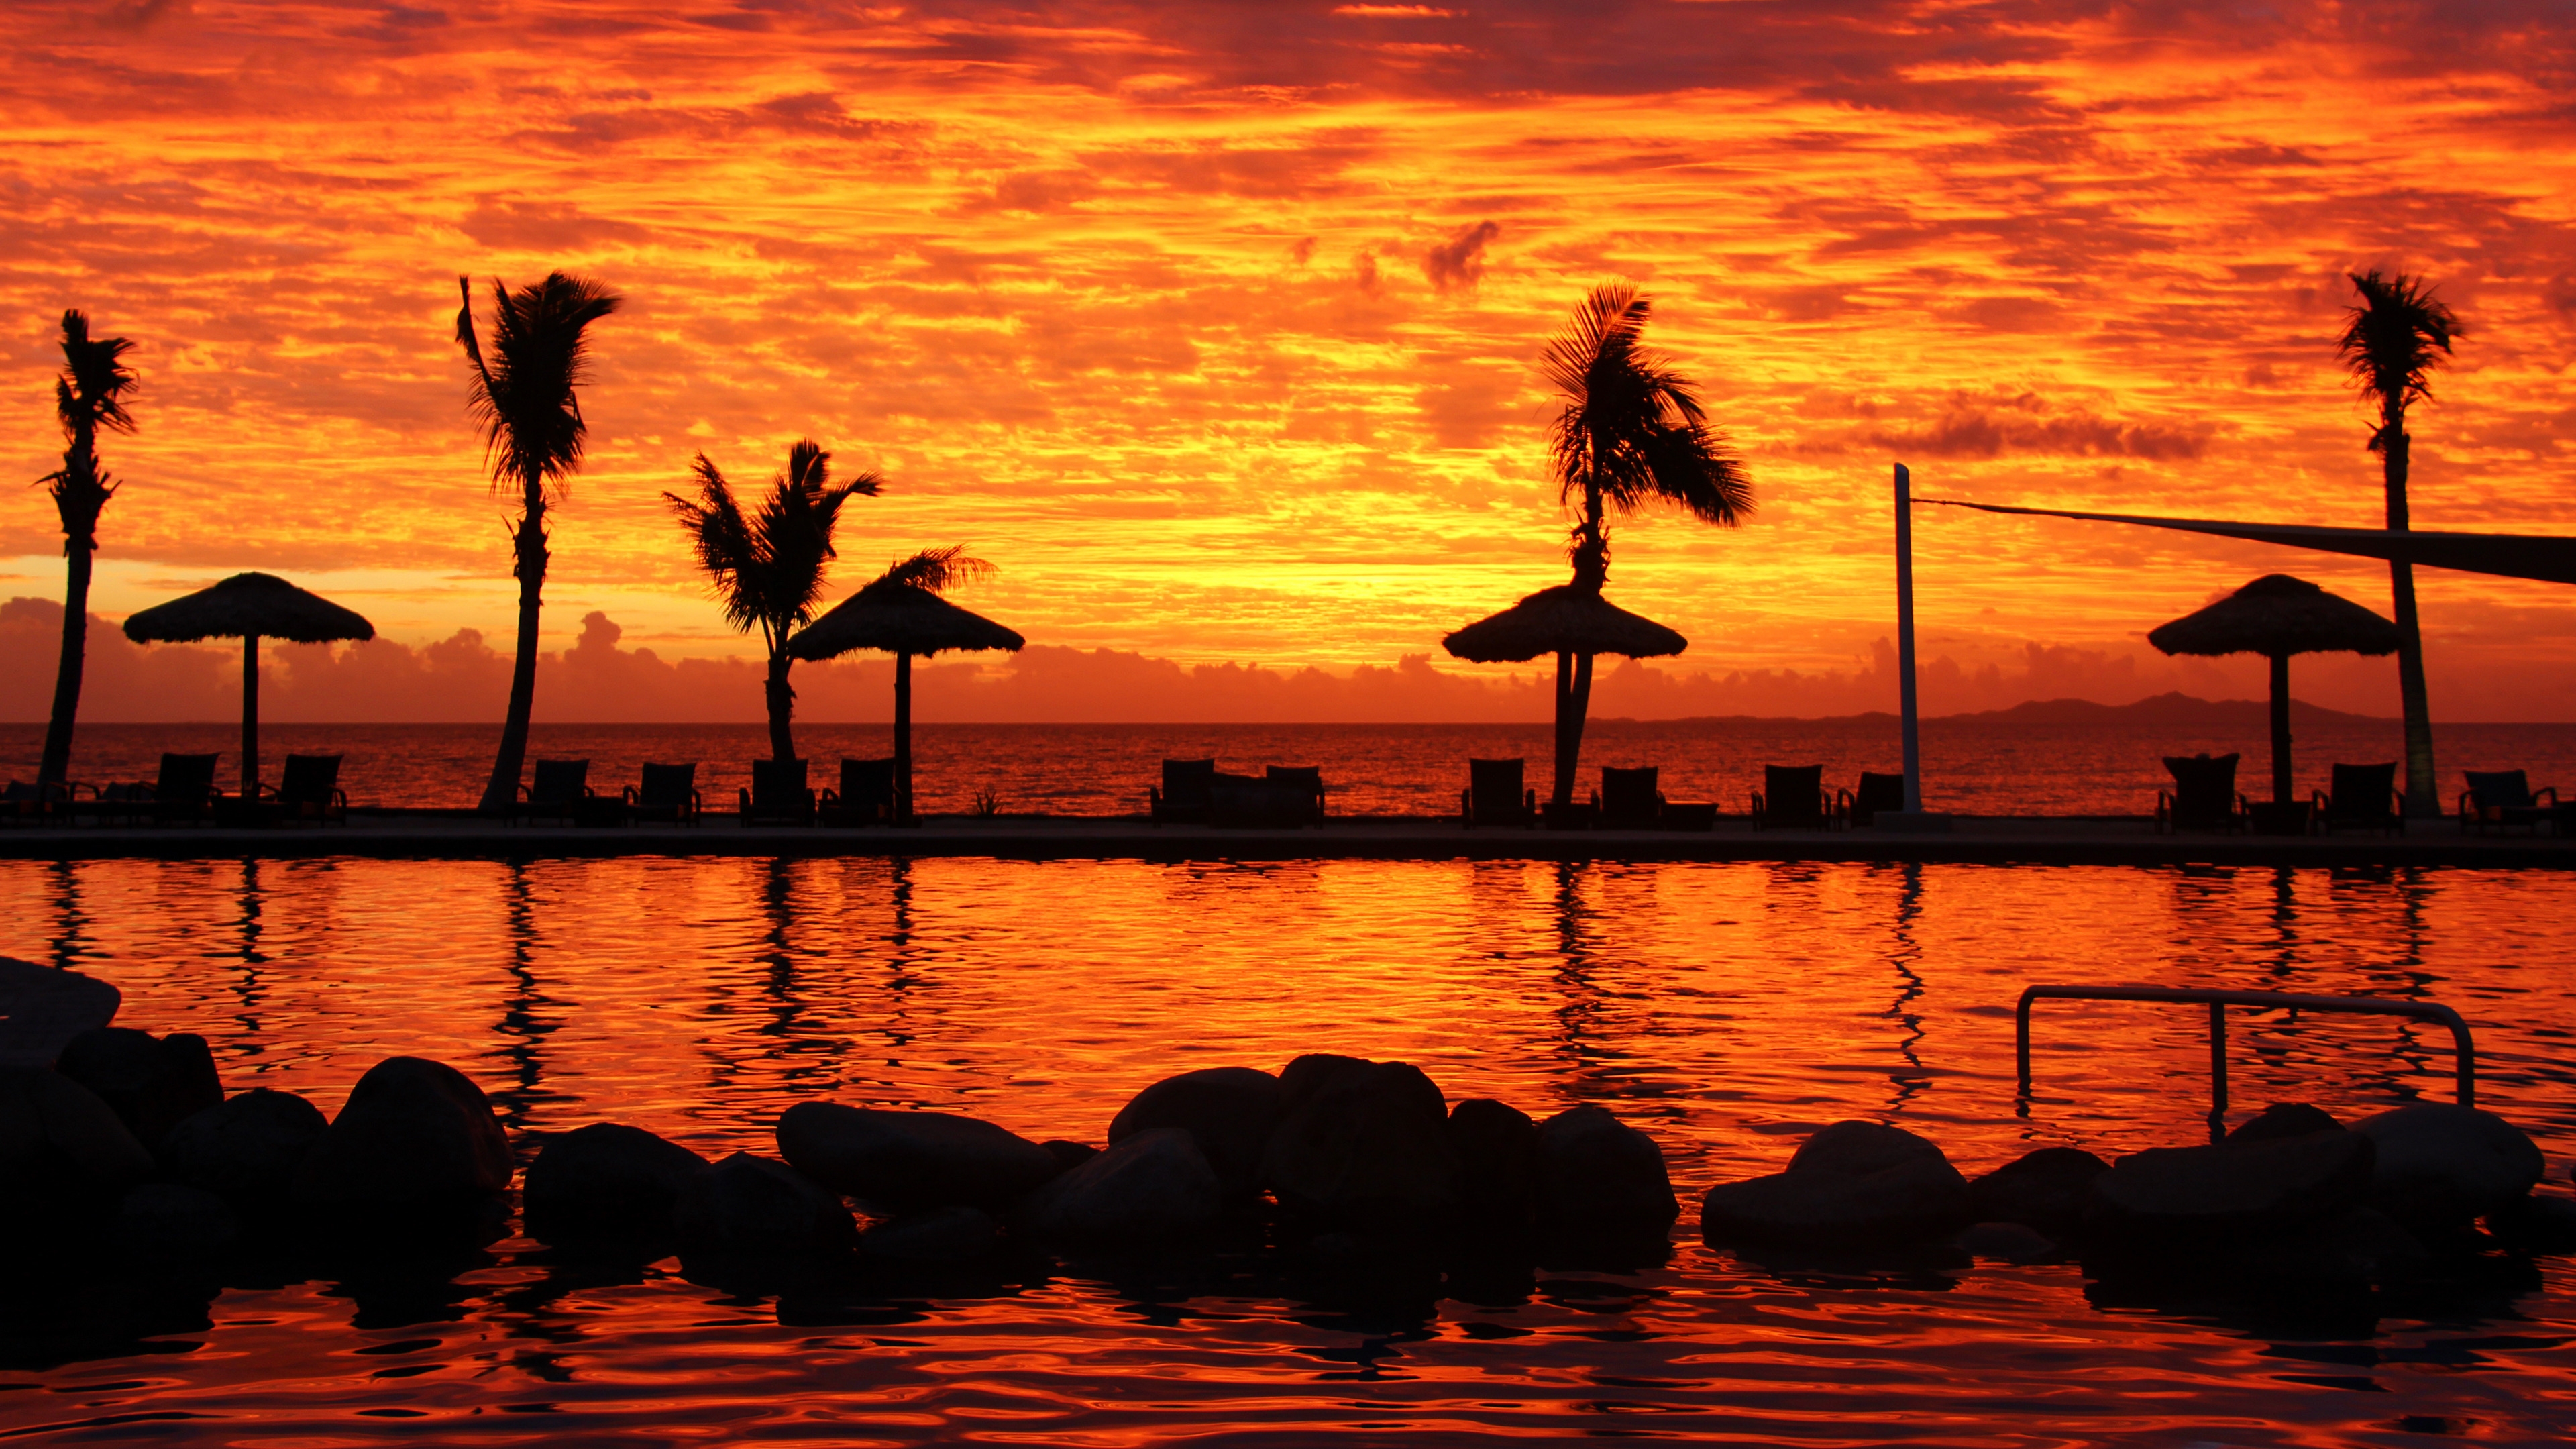 Fijian Sunset for 3840 x 2160 Ultra HD resolution